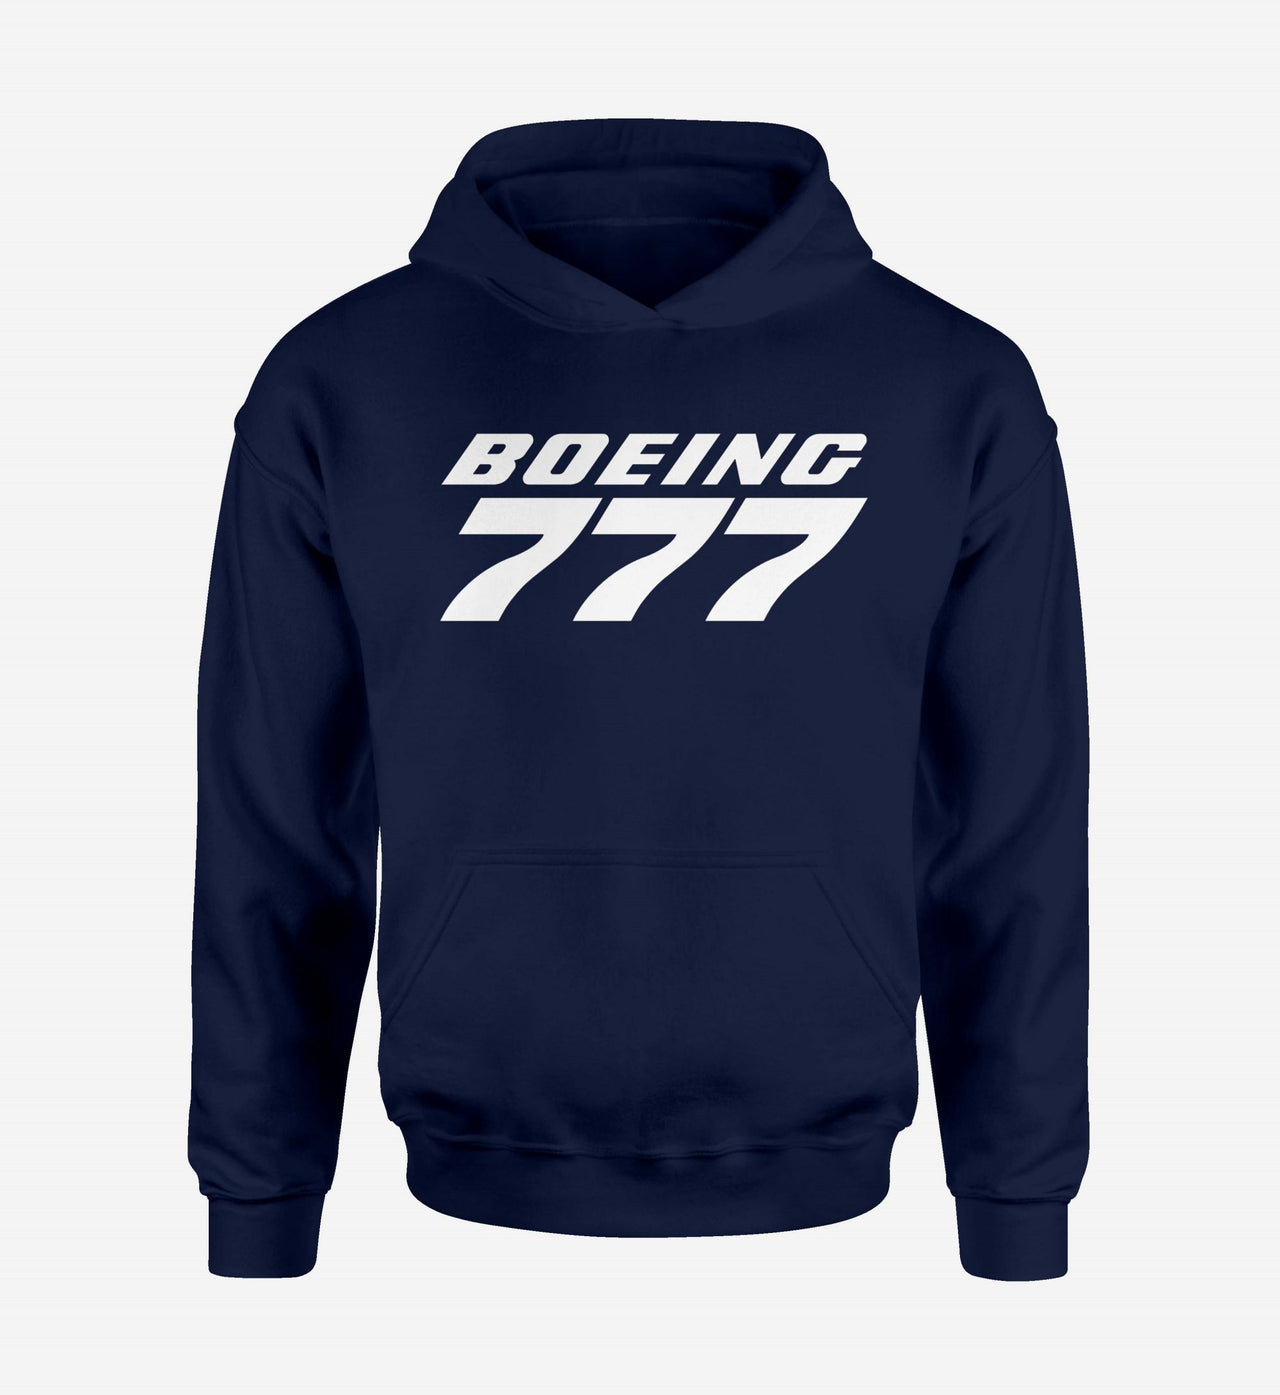 Boeing 777 & Text Designed Hoodies